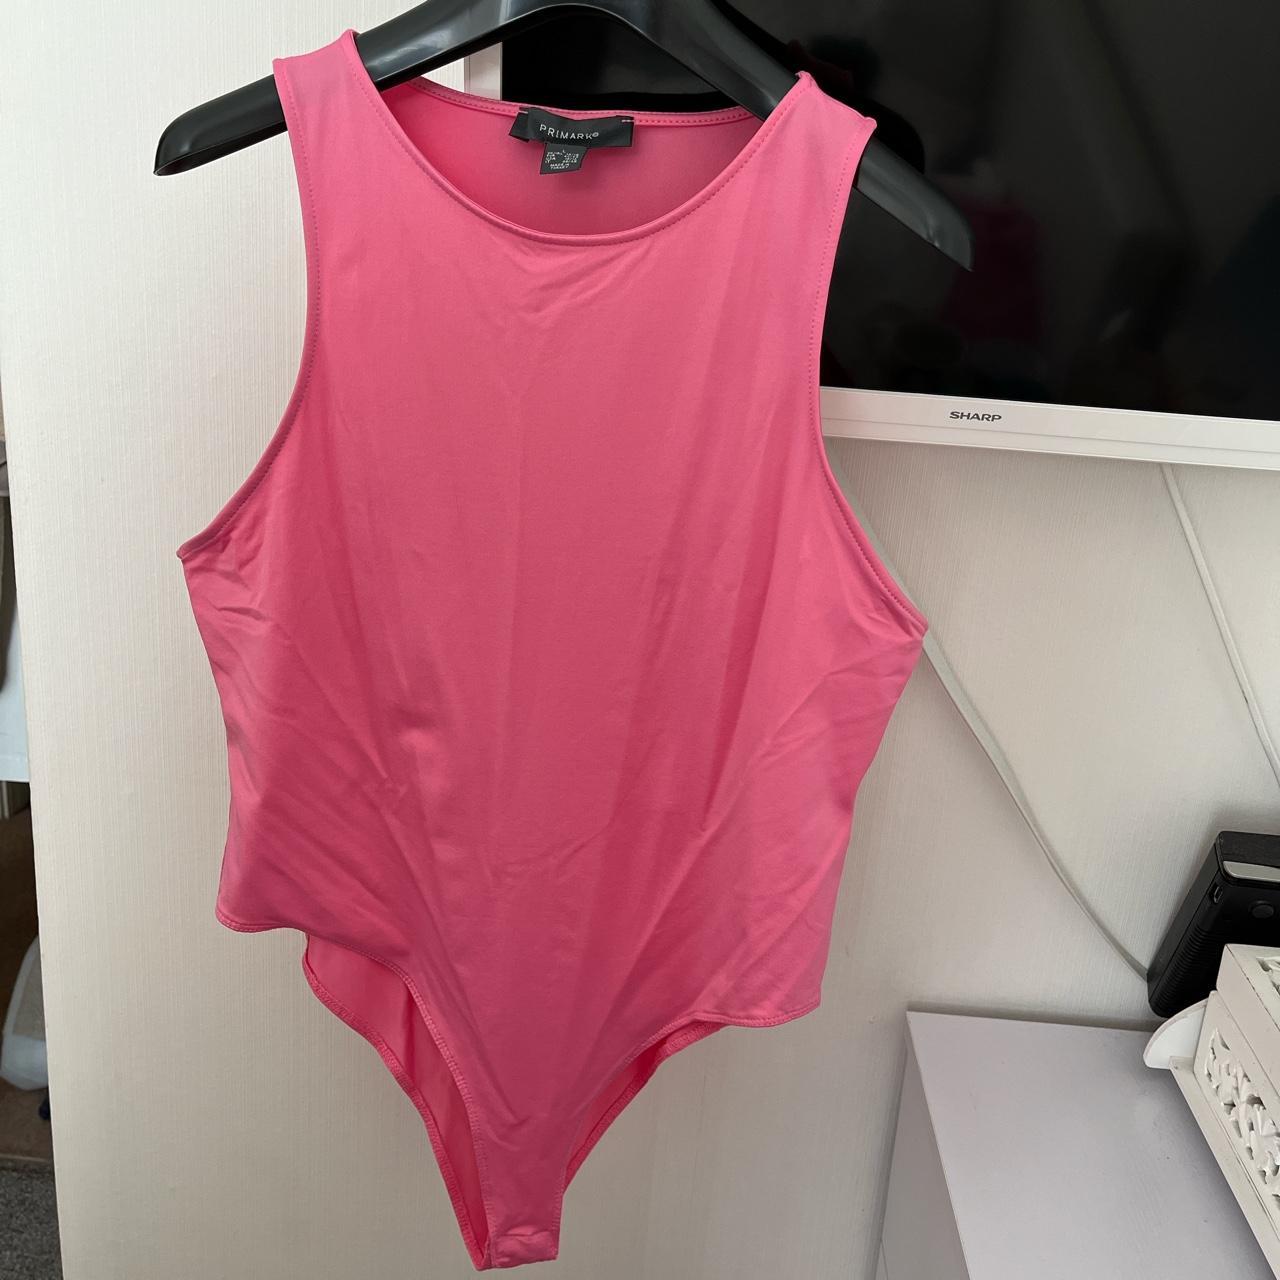 Primark bodysuit, Pink, Size large, best fit size